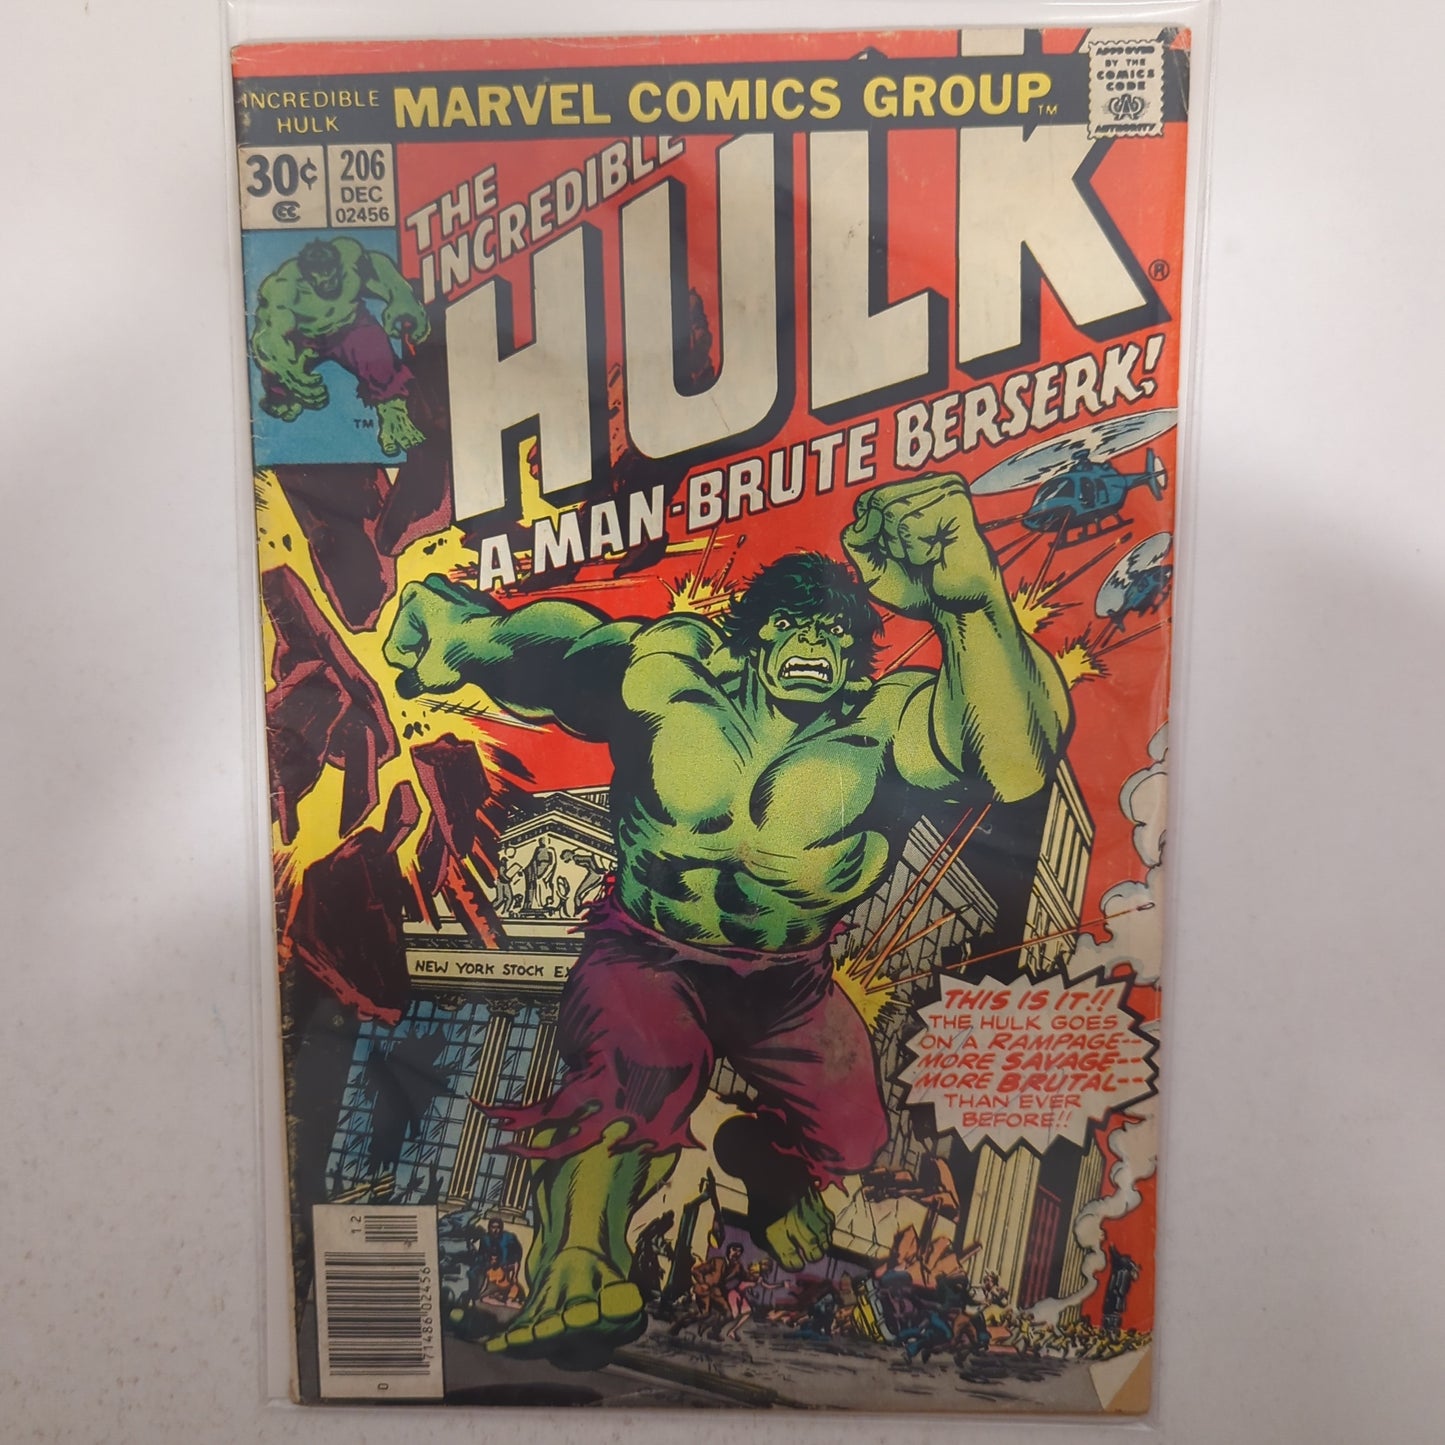 The Incredible Hulk #206 Newsstand